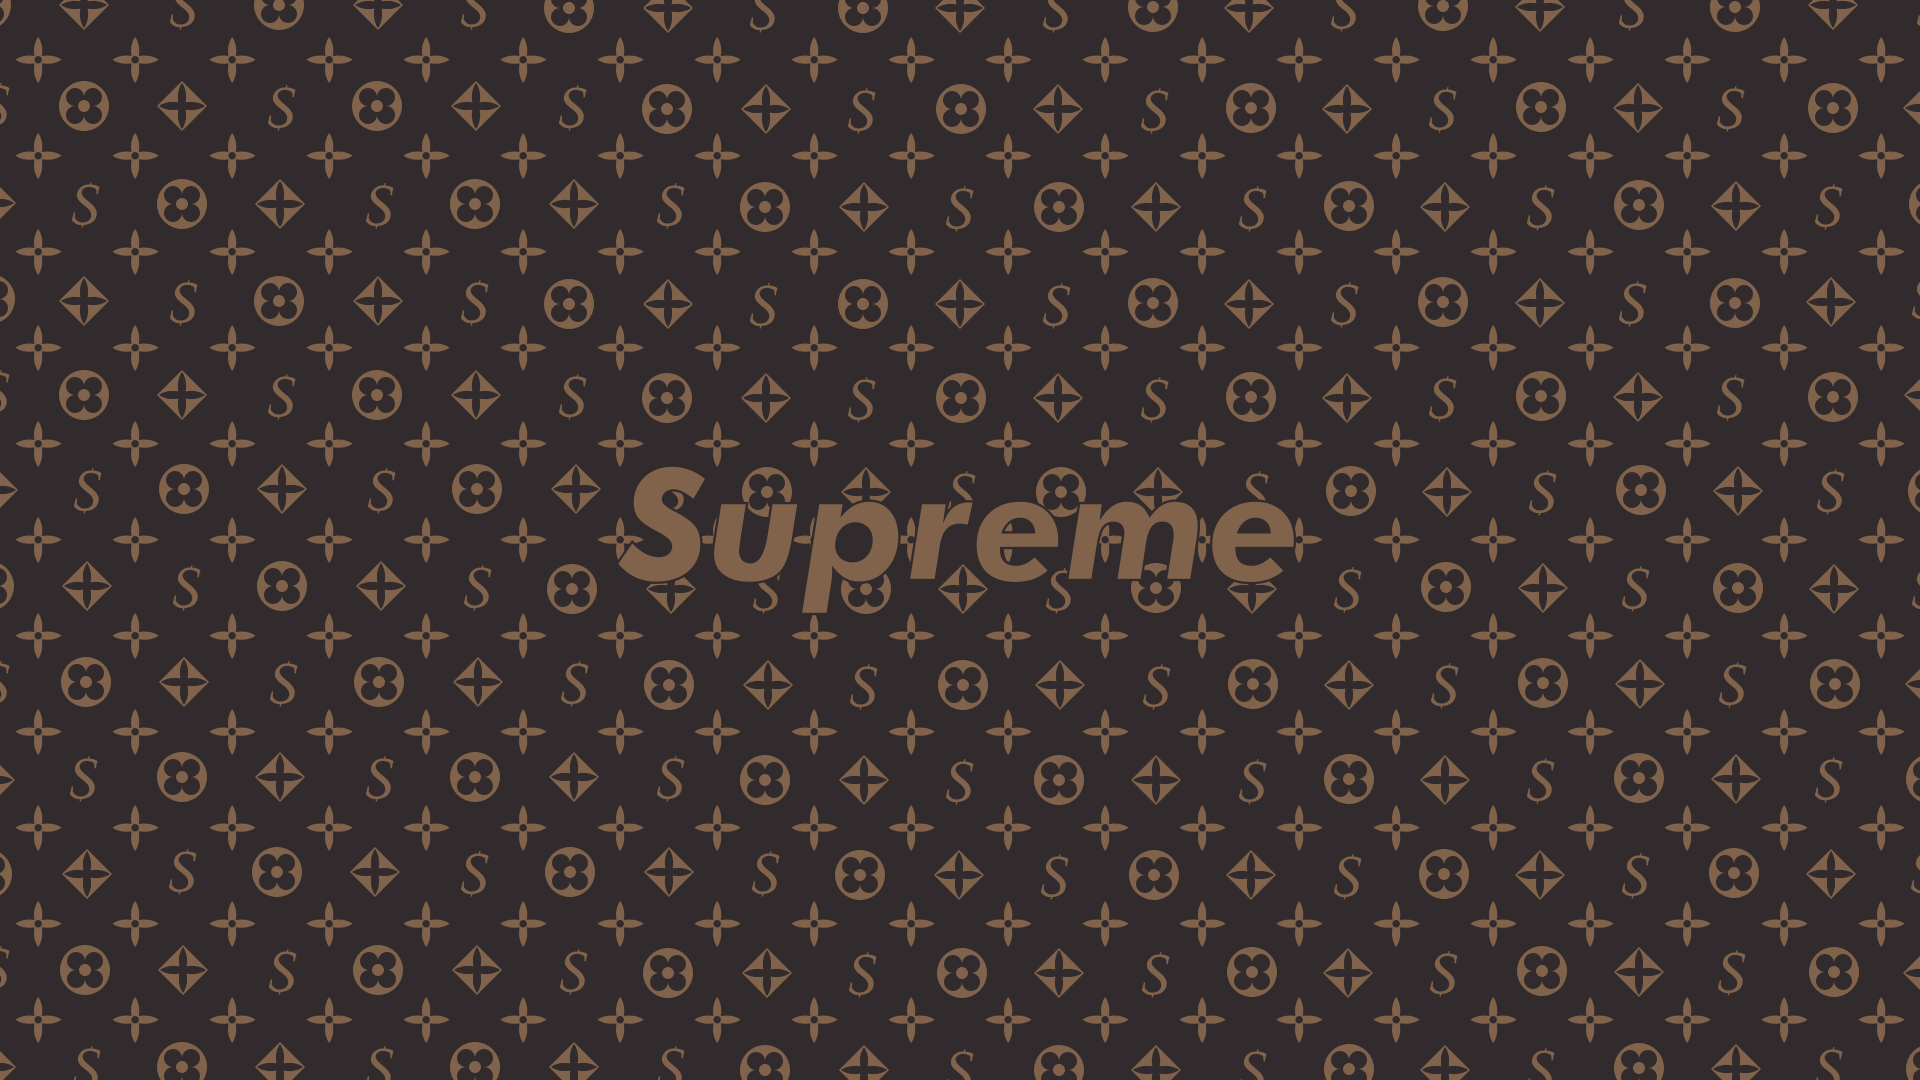 Some Supreme x LV Wallpaper I made